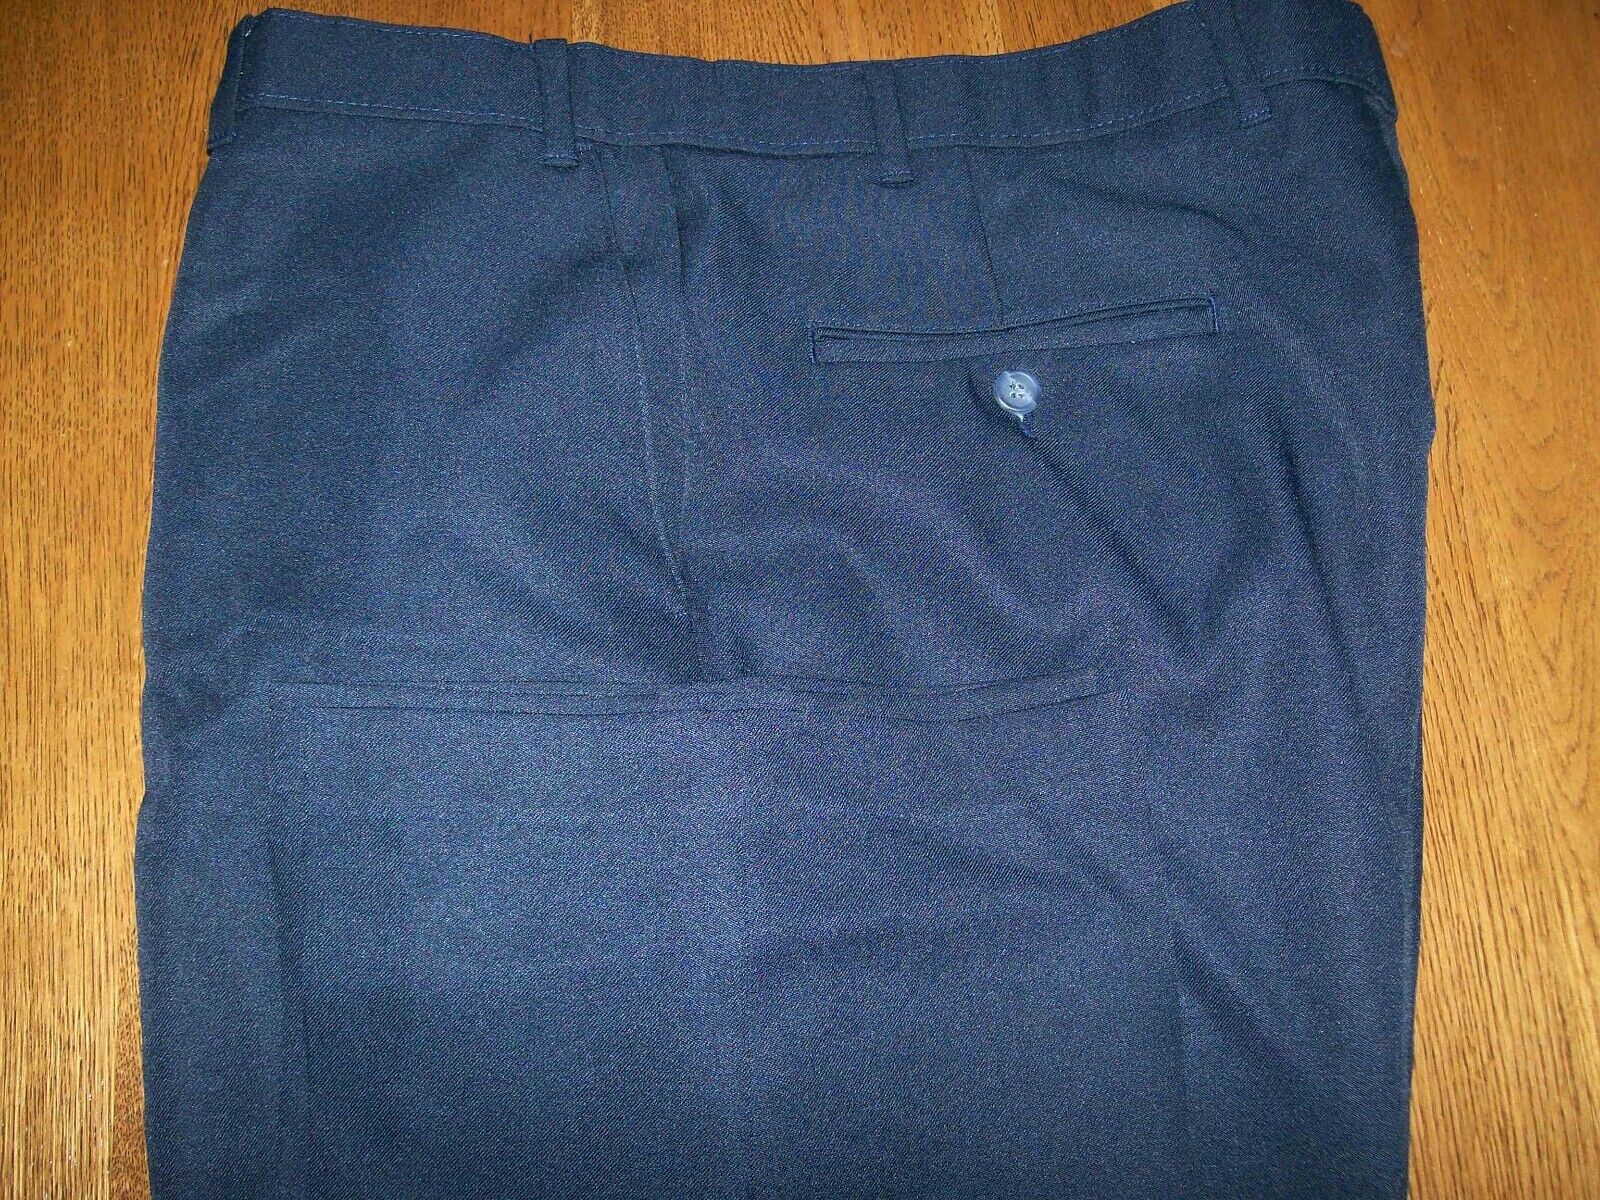 Levi Action Slacks Flat Front Dress Pant Navy Blue Dacron Polyester Mens 40 x 32